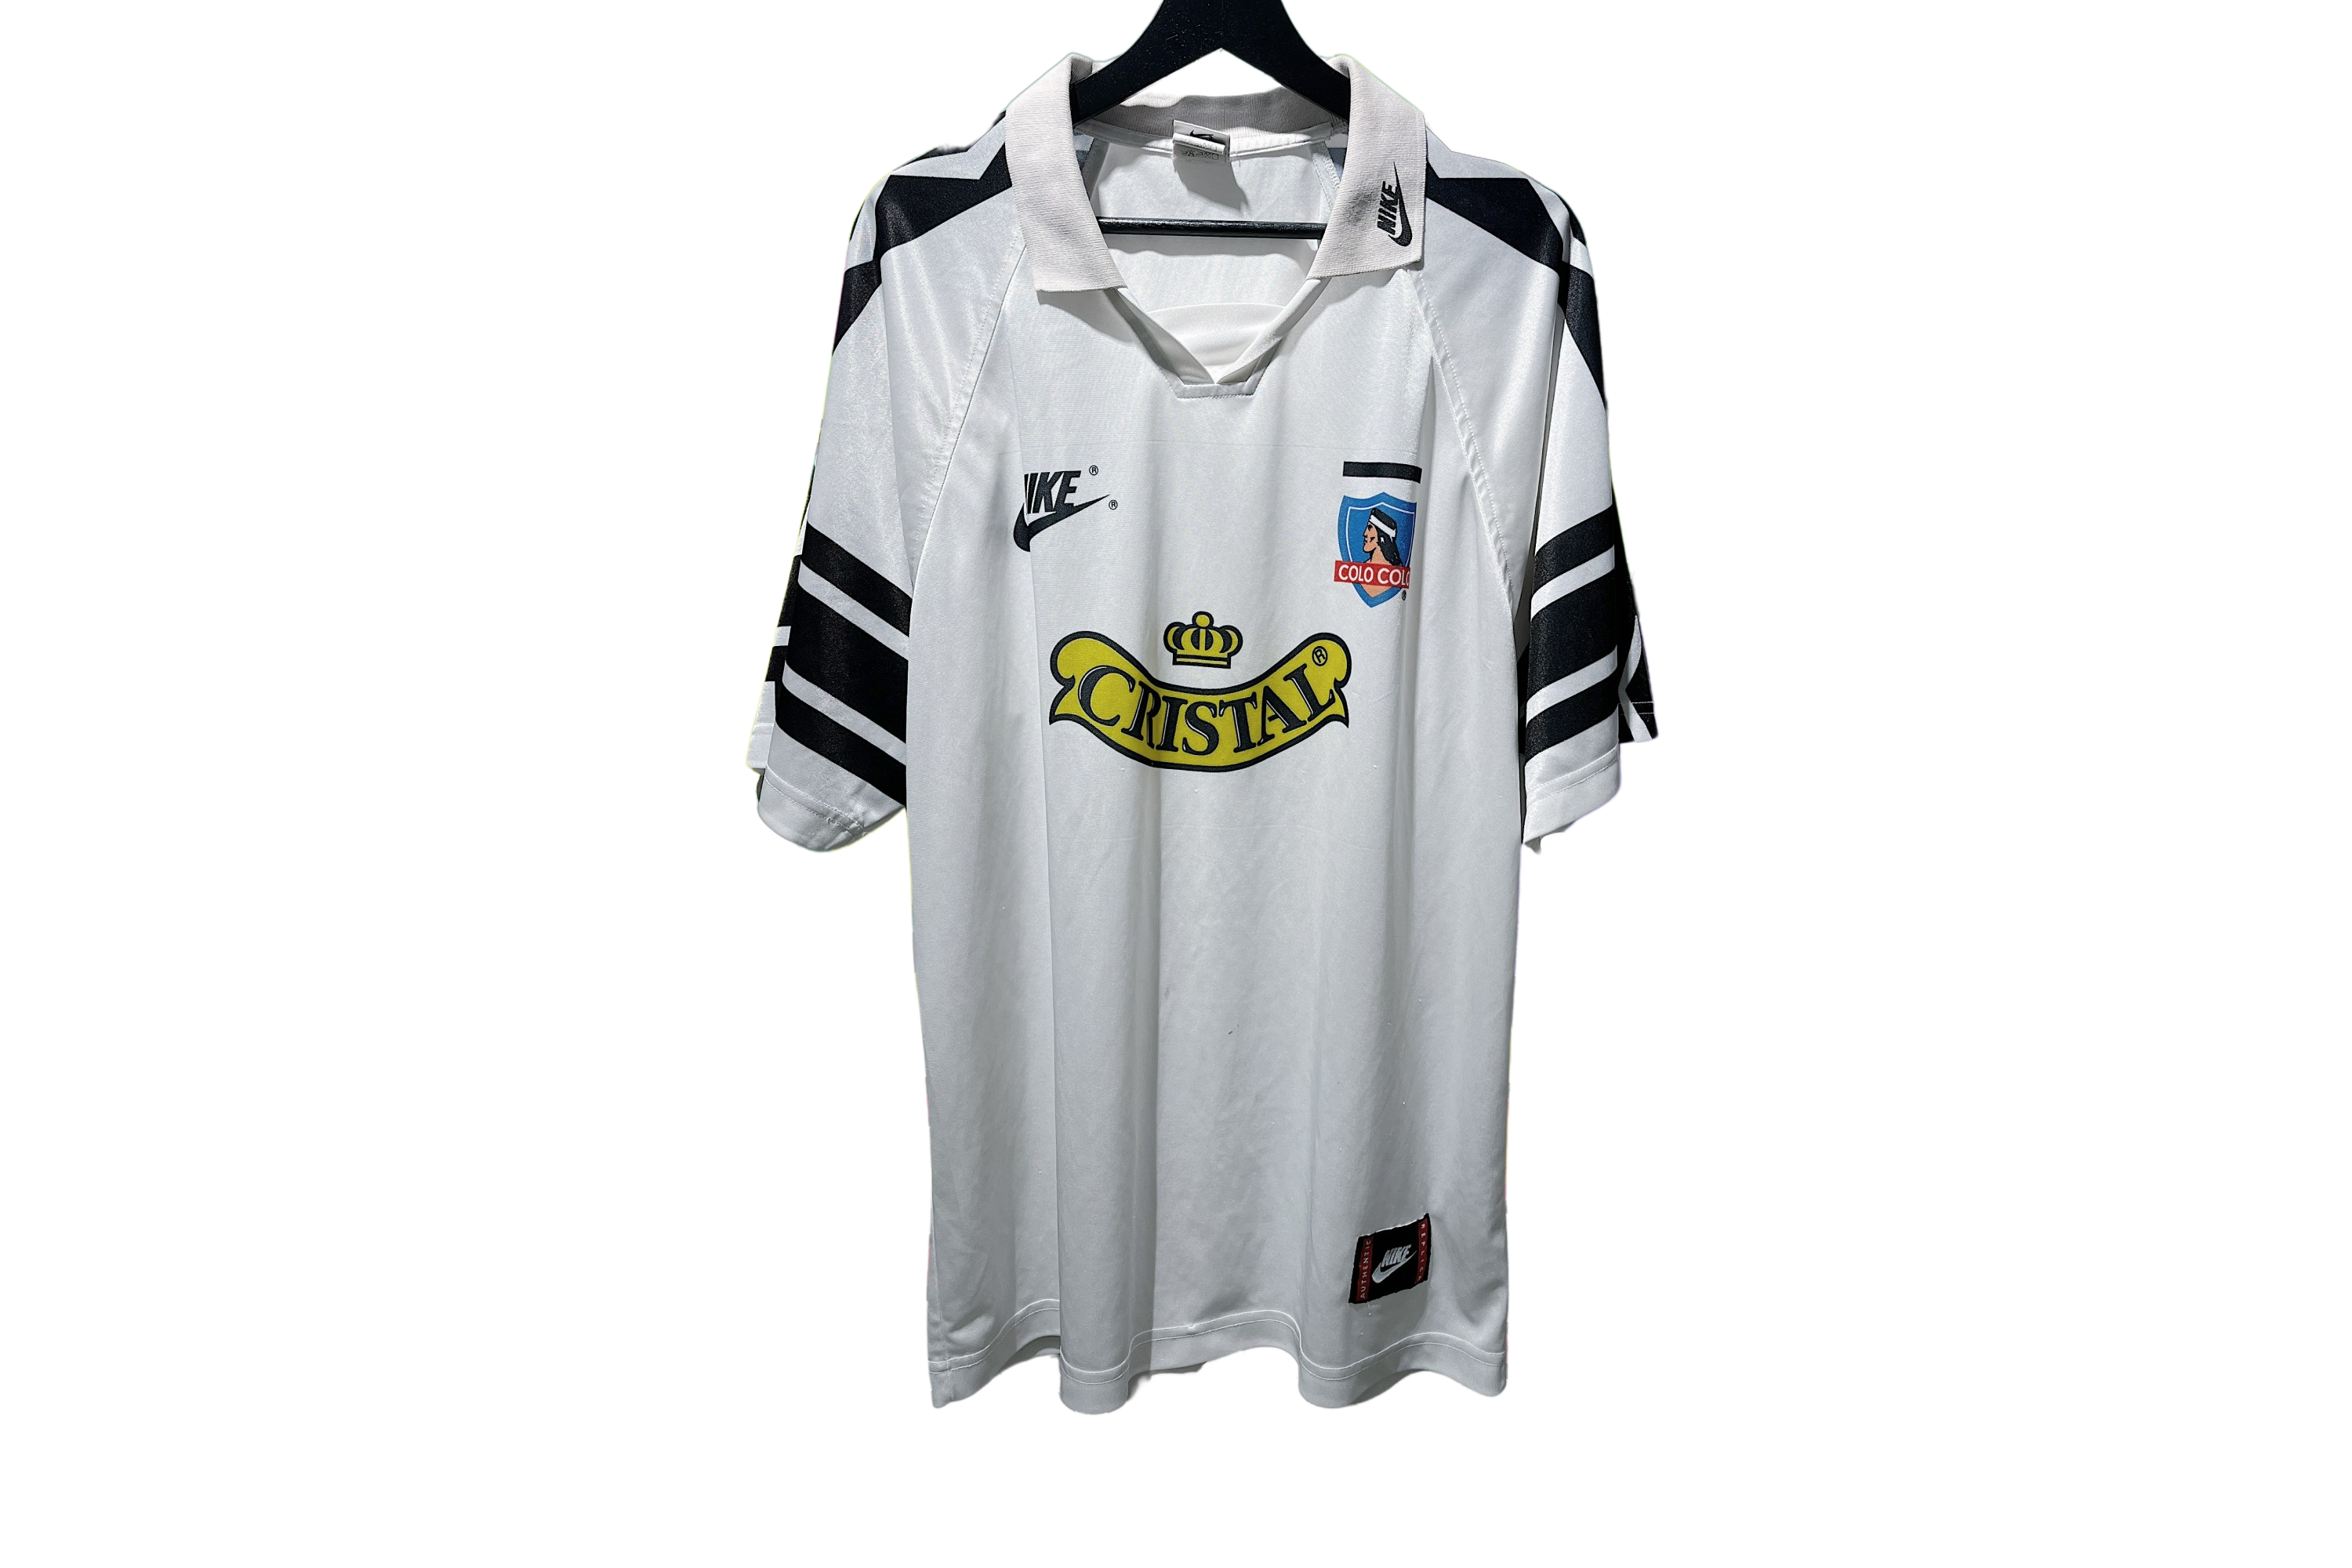 Nike - Colo-Colo 1995 Home Football Shirt